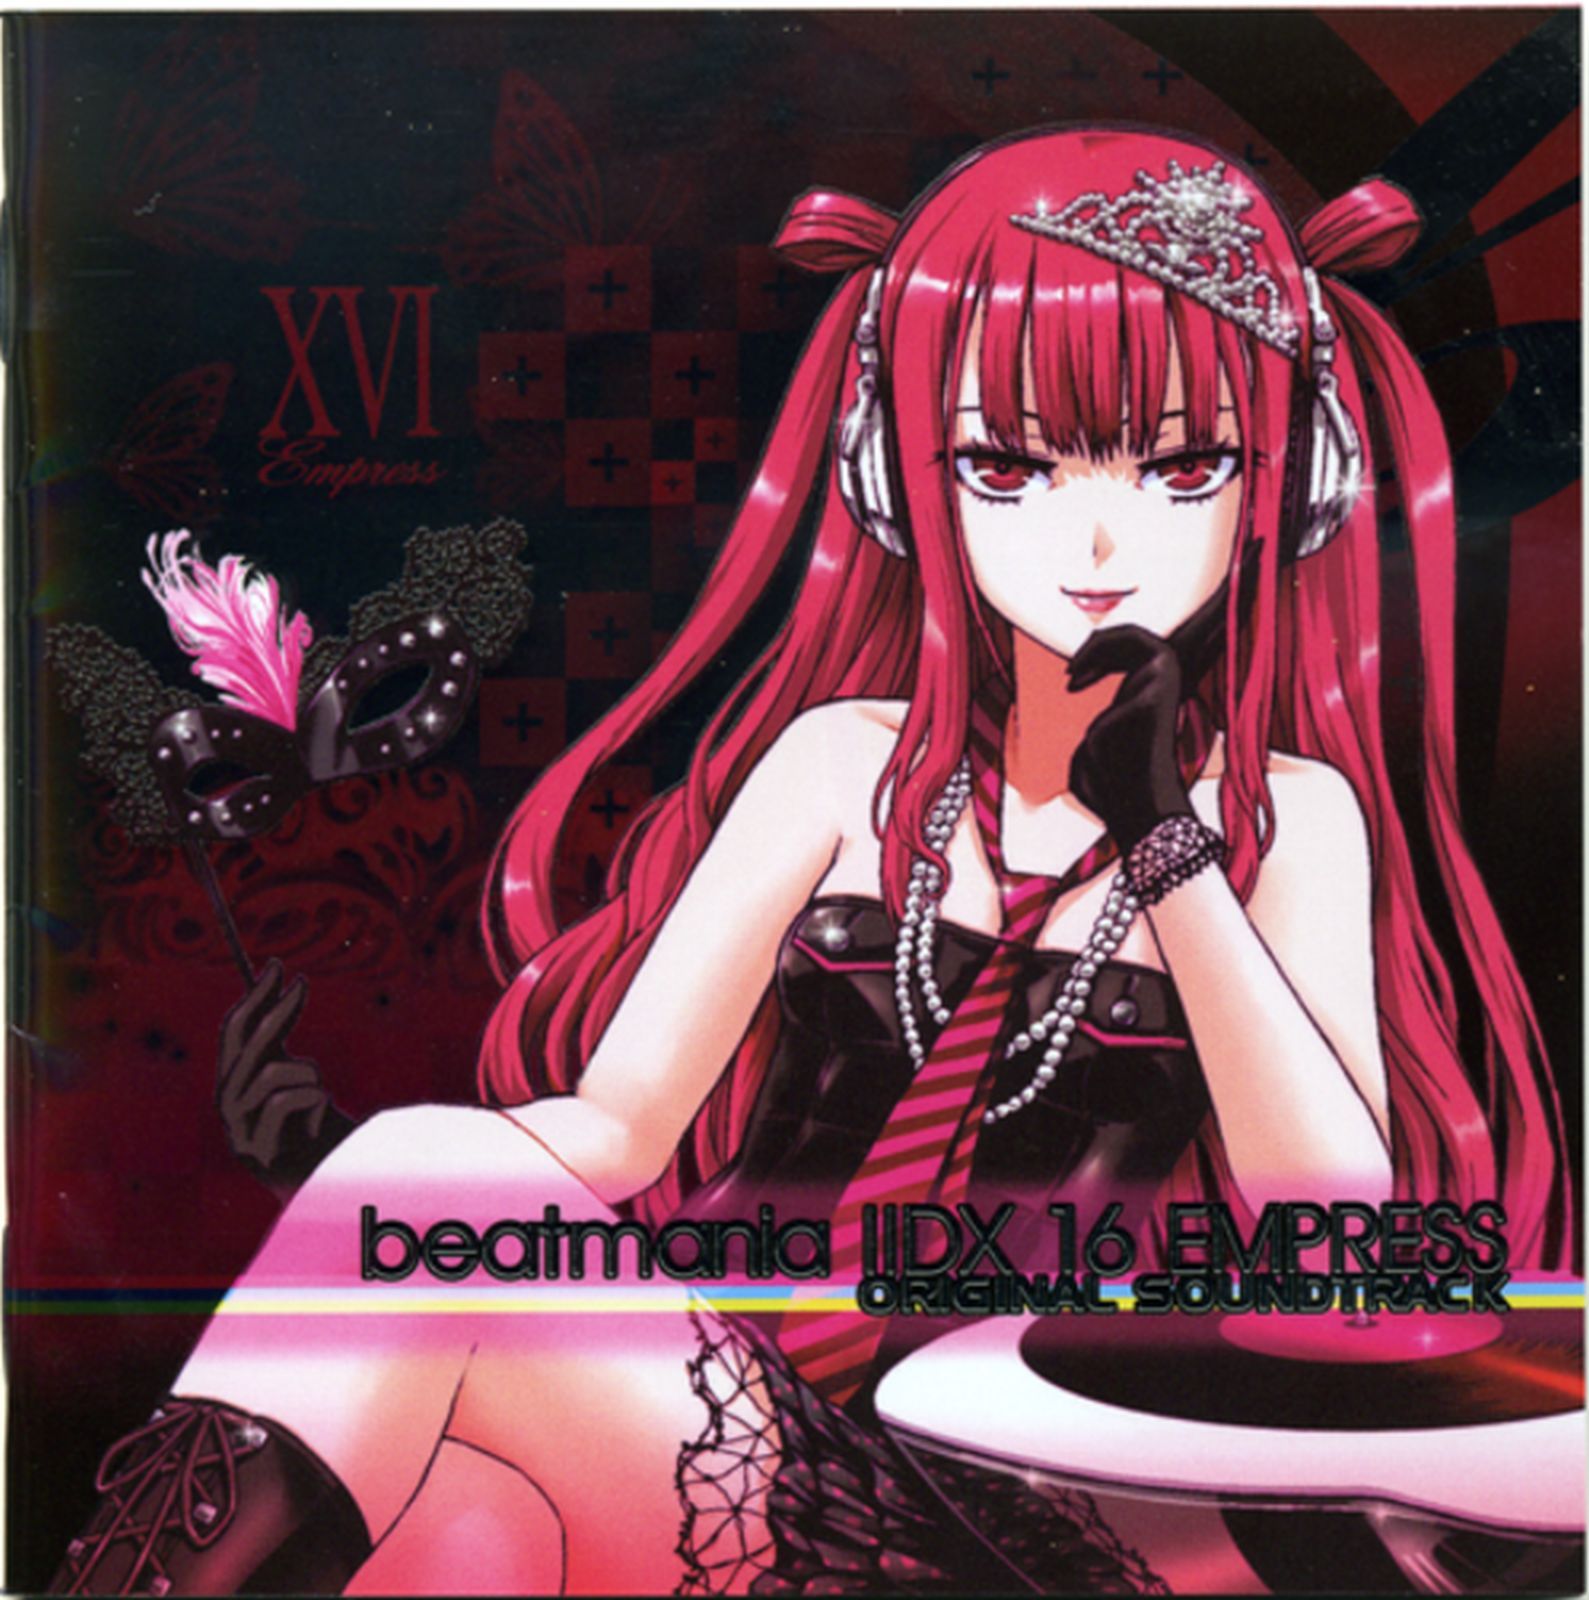 Beatmania Iidx 16 Em Akira Yamaoka Cd Covers Cover Century Over 500 000 Album Art Covers For Free